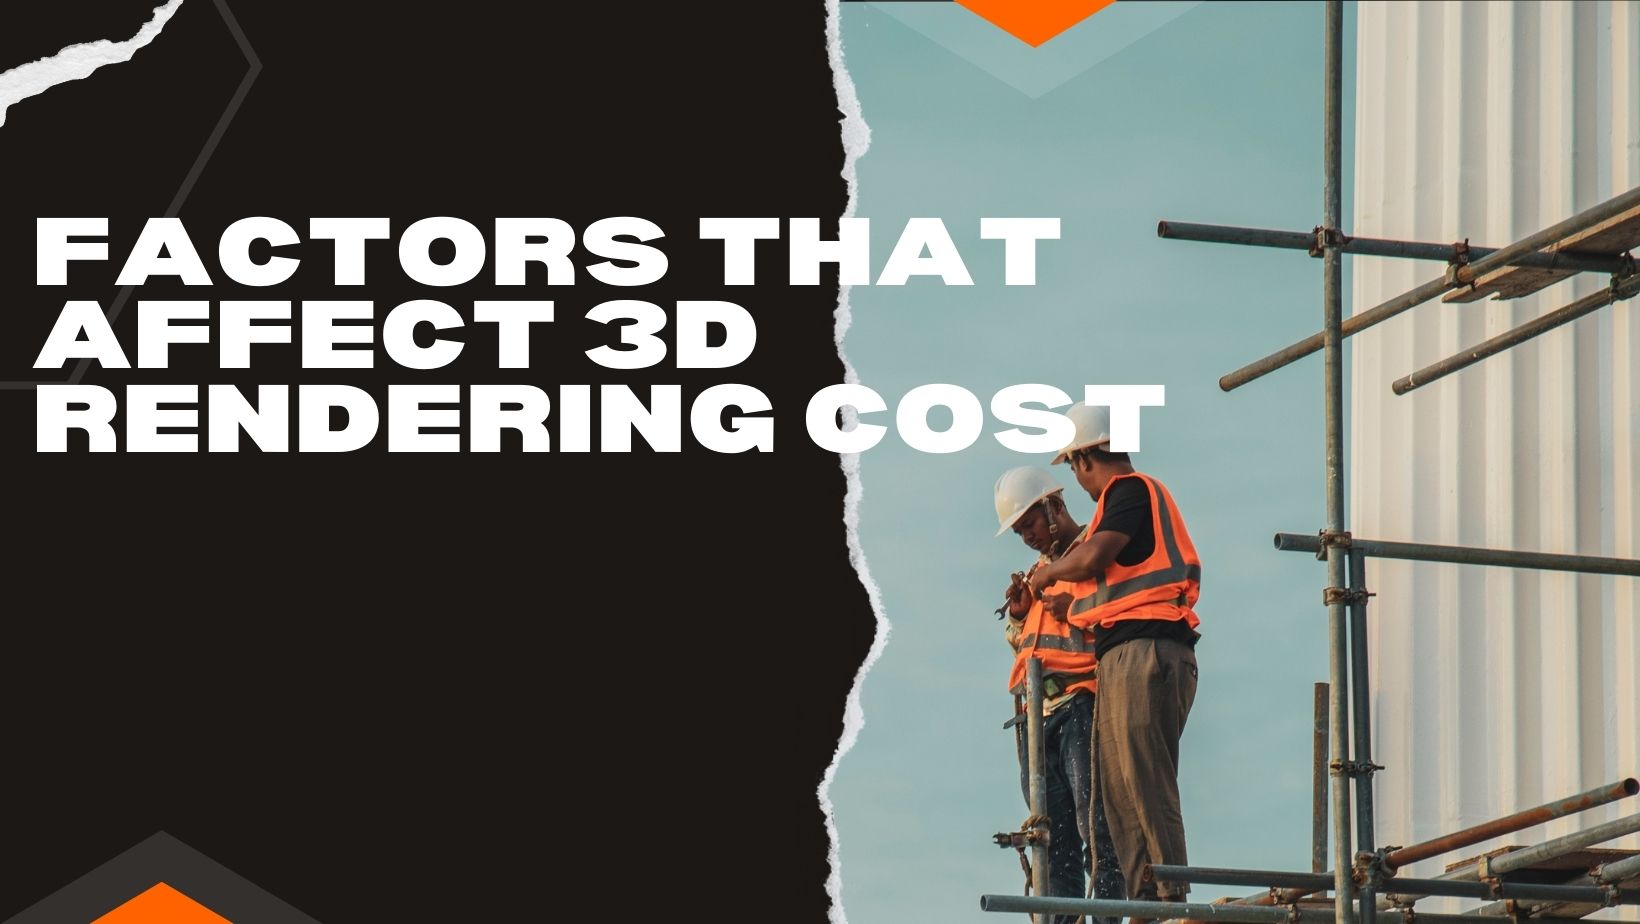 Factors that Affect 3D Rendering Cost